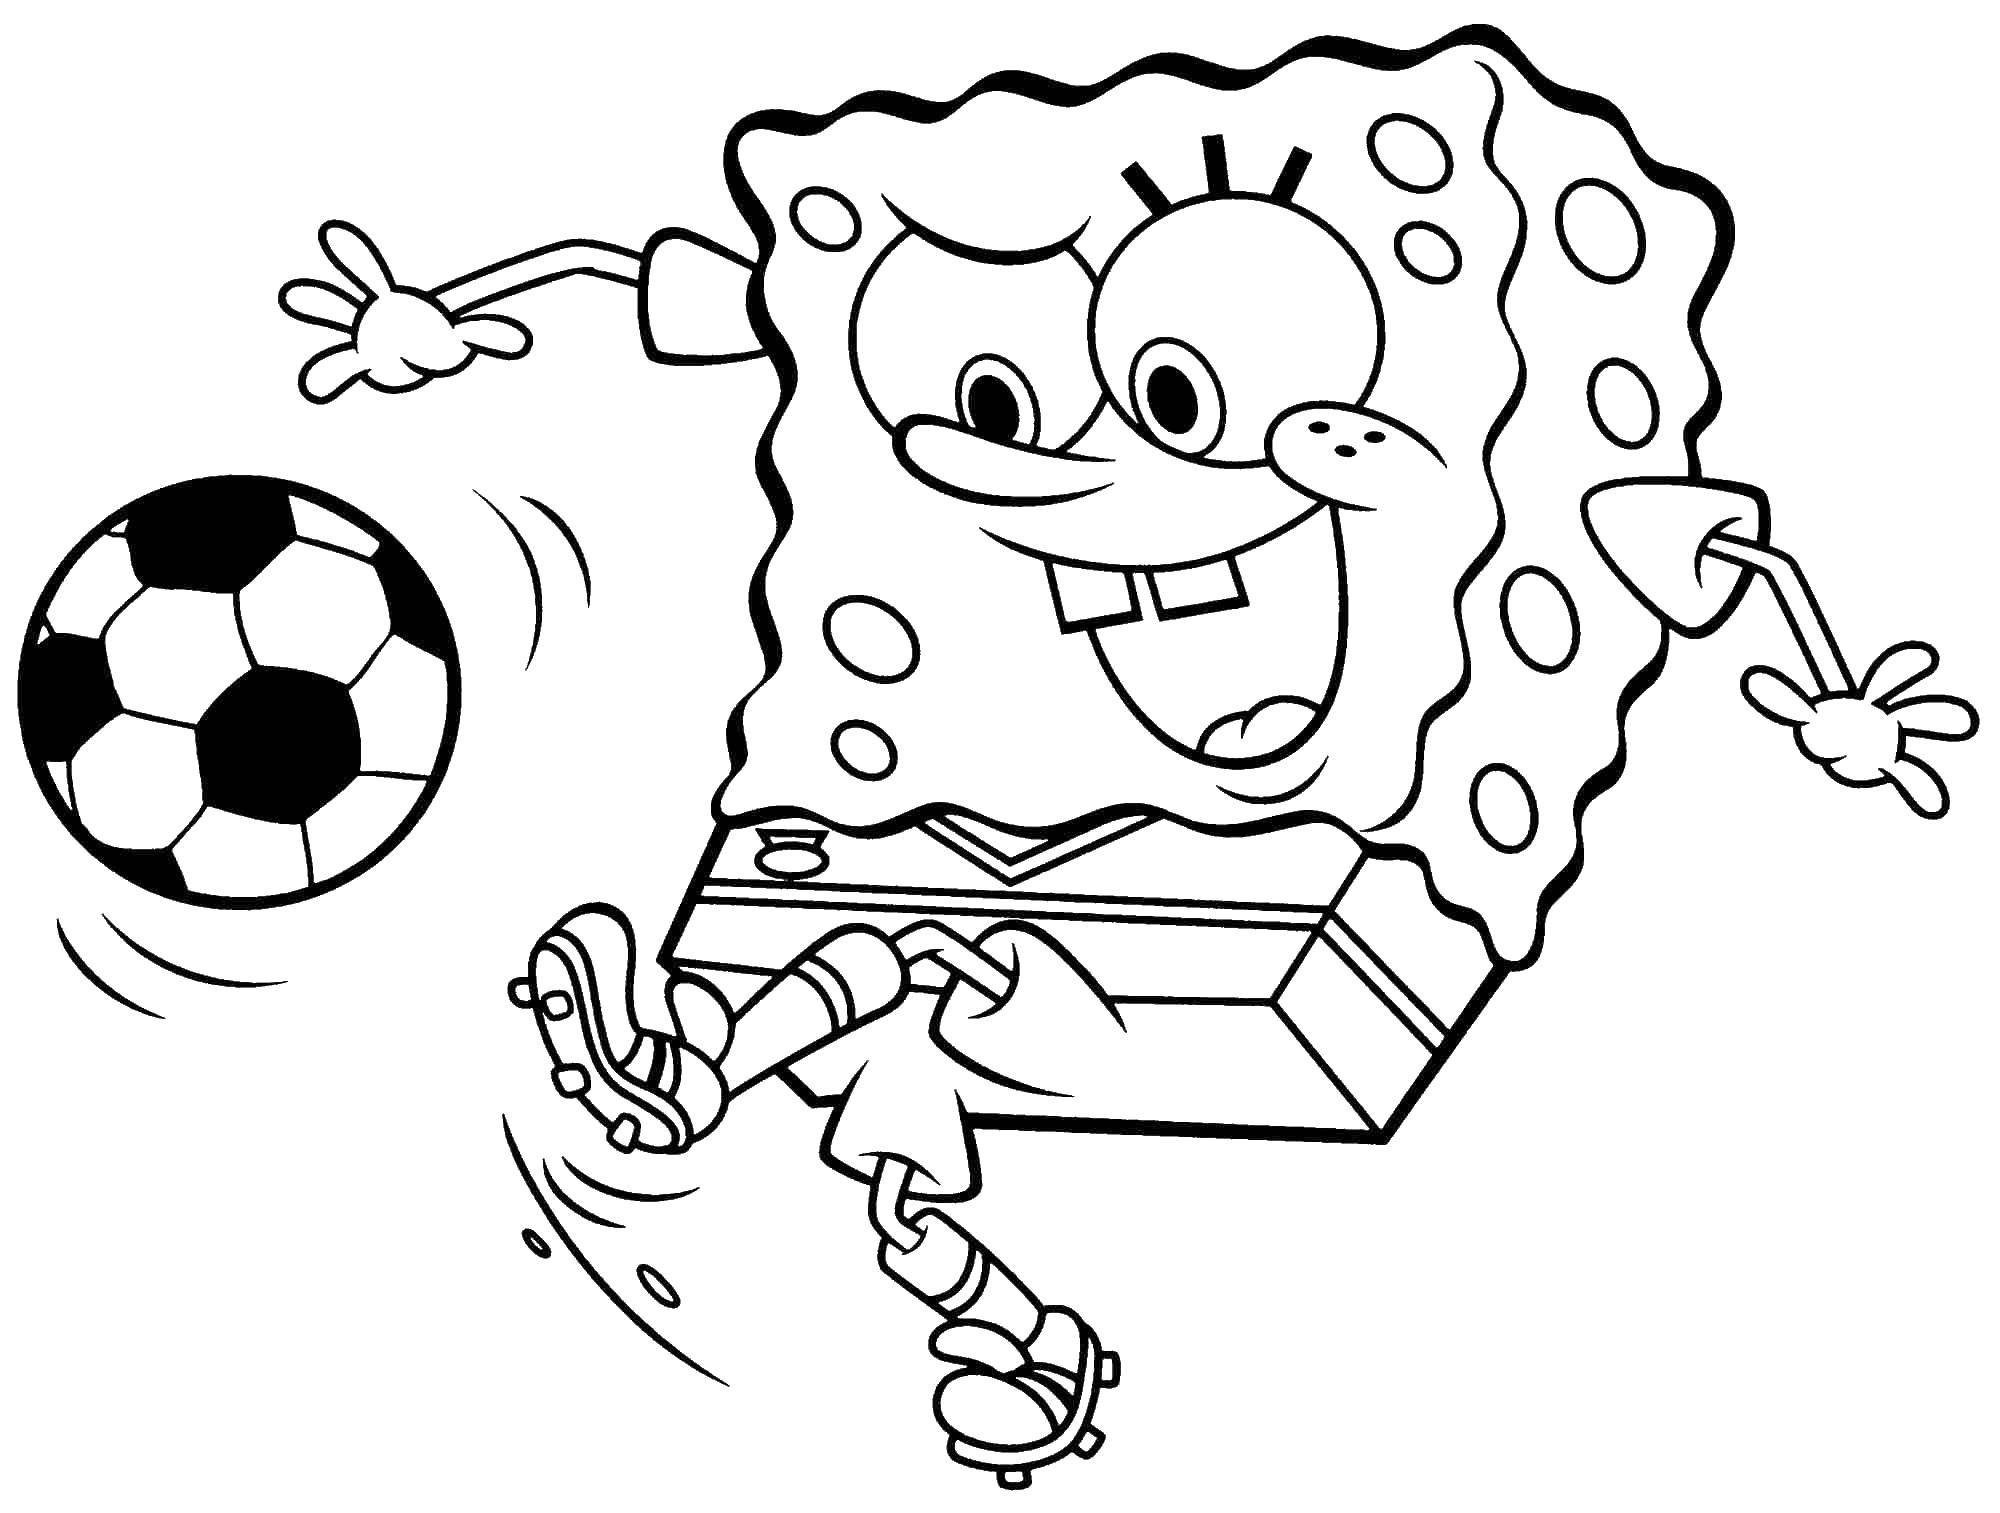 Coloring Spongebob with soccer ball. Category Spongebob. Tags:  The spongebob, Patrick.